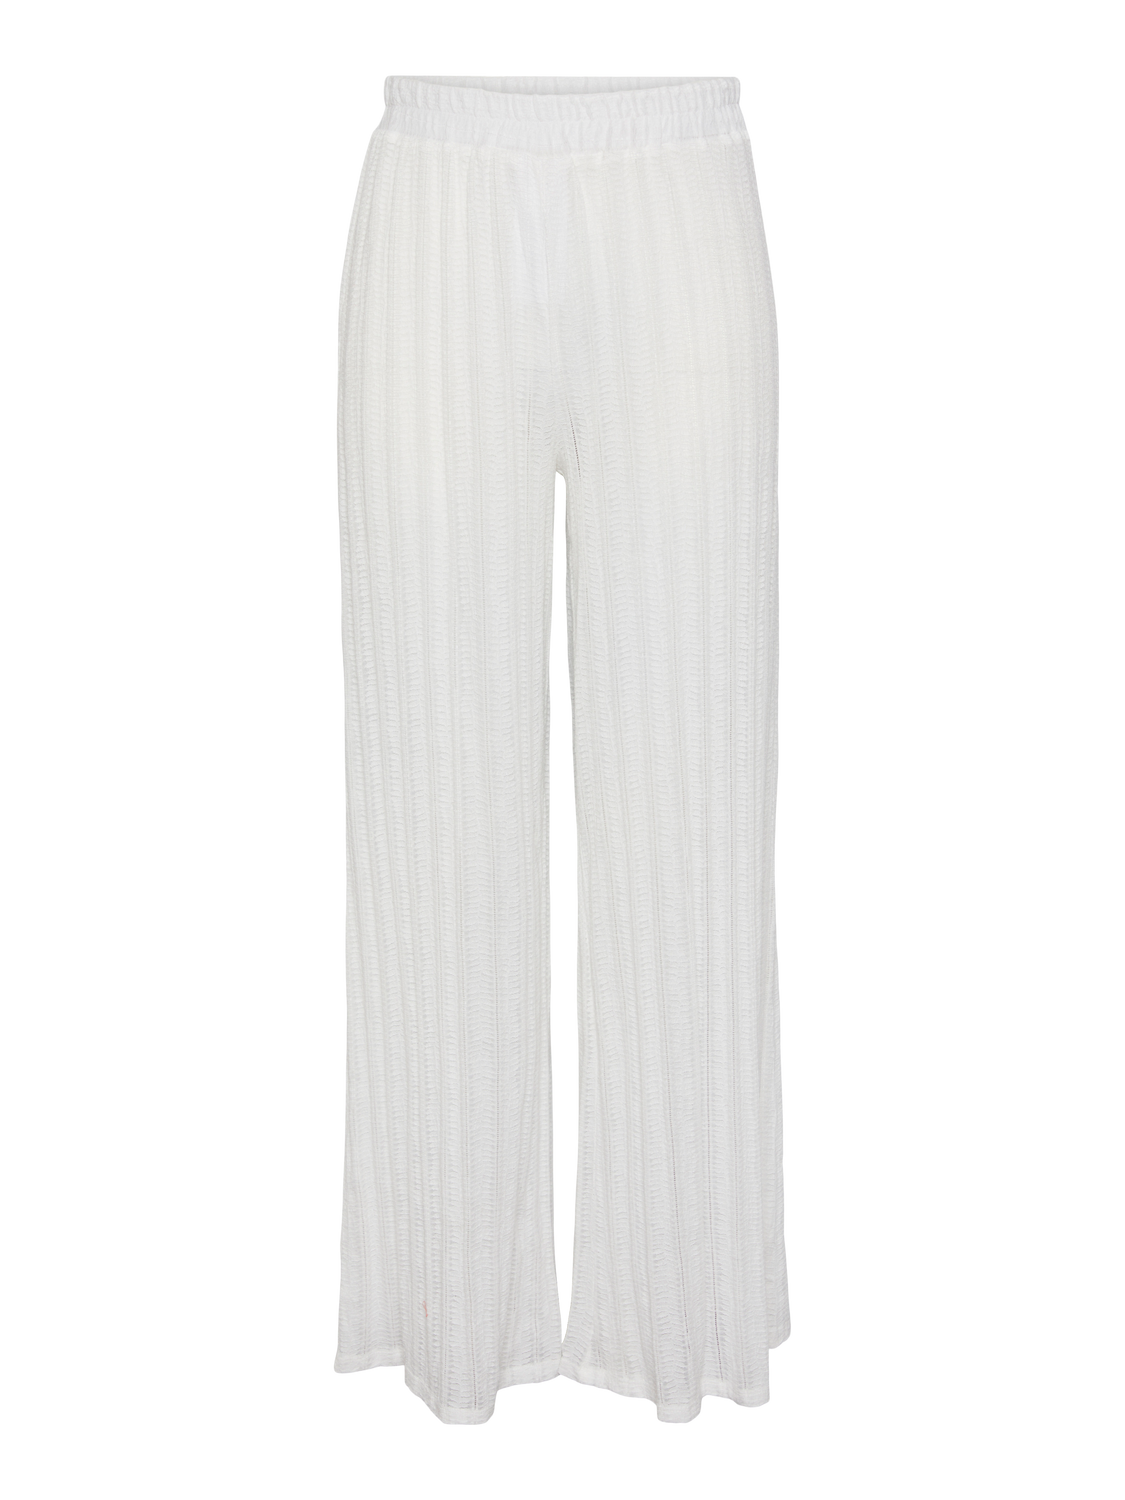 PCAFIE Pants - Bright White